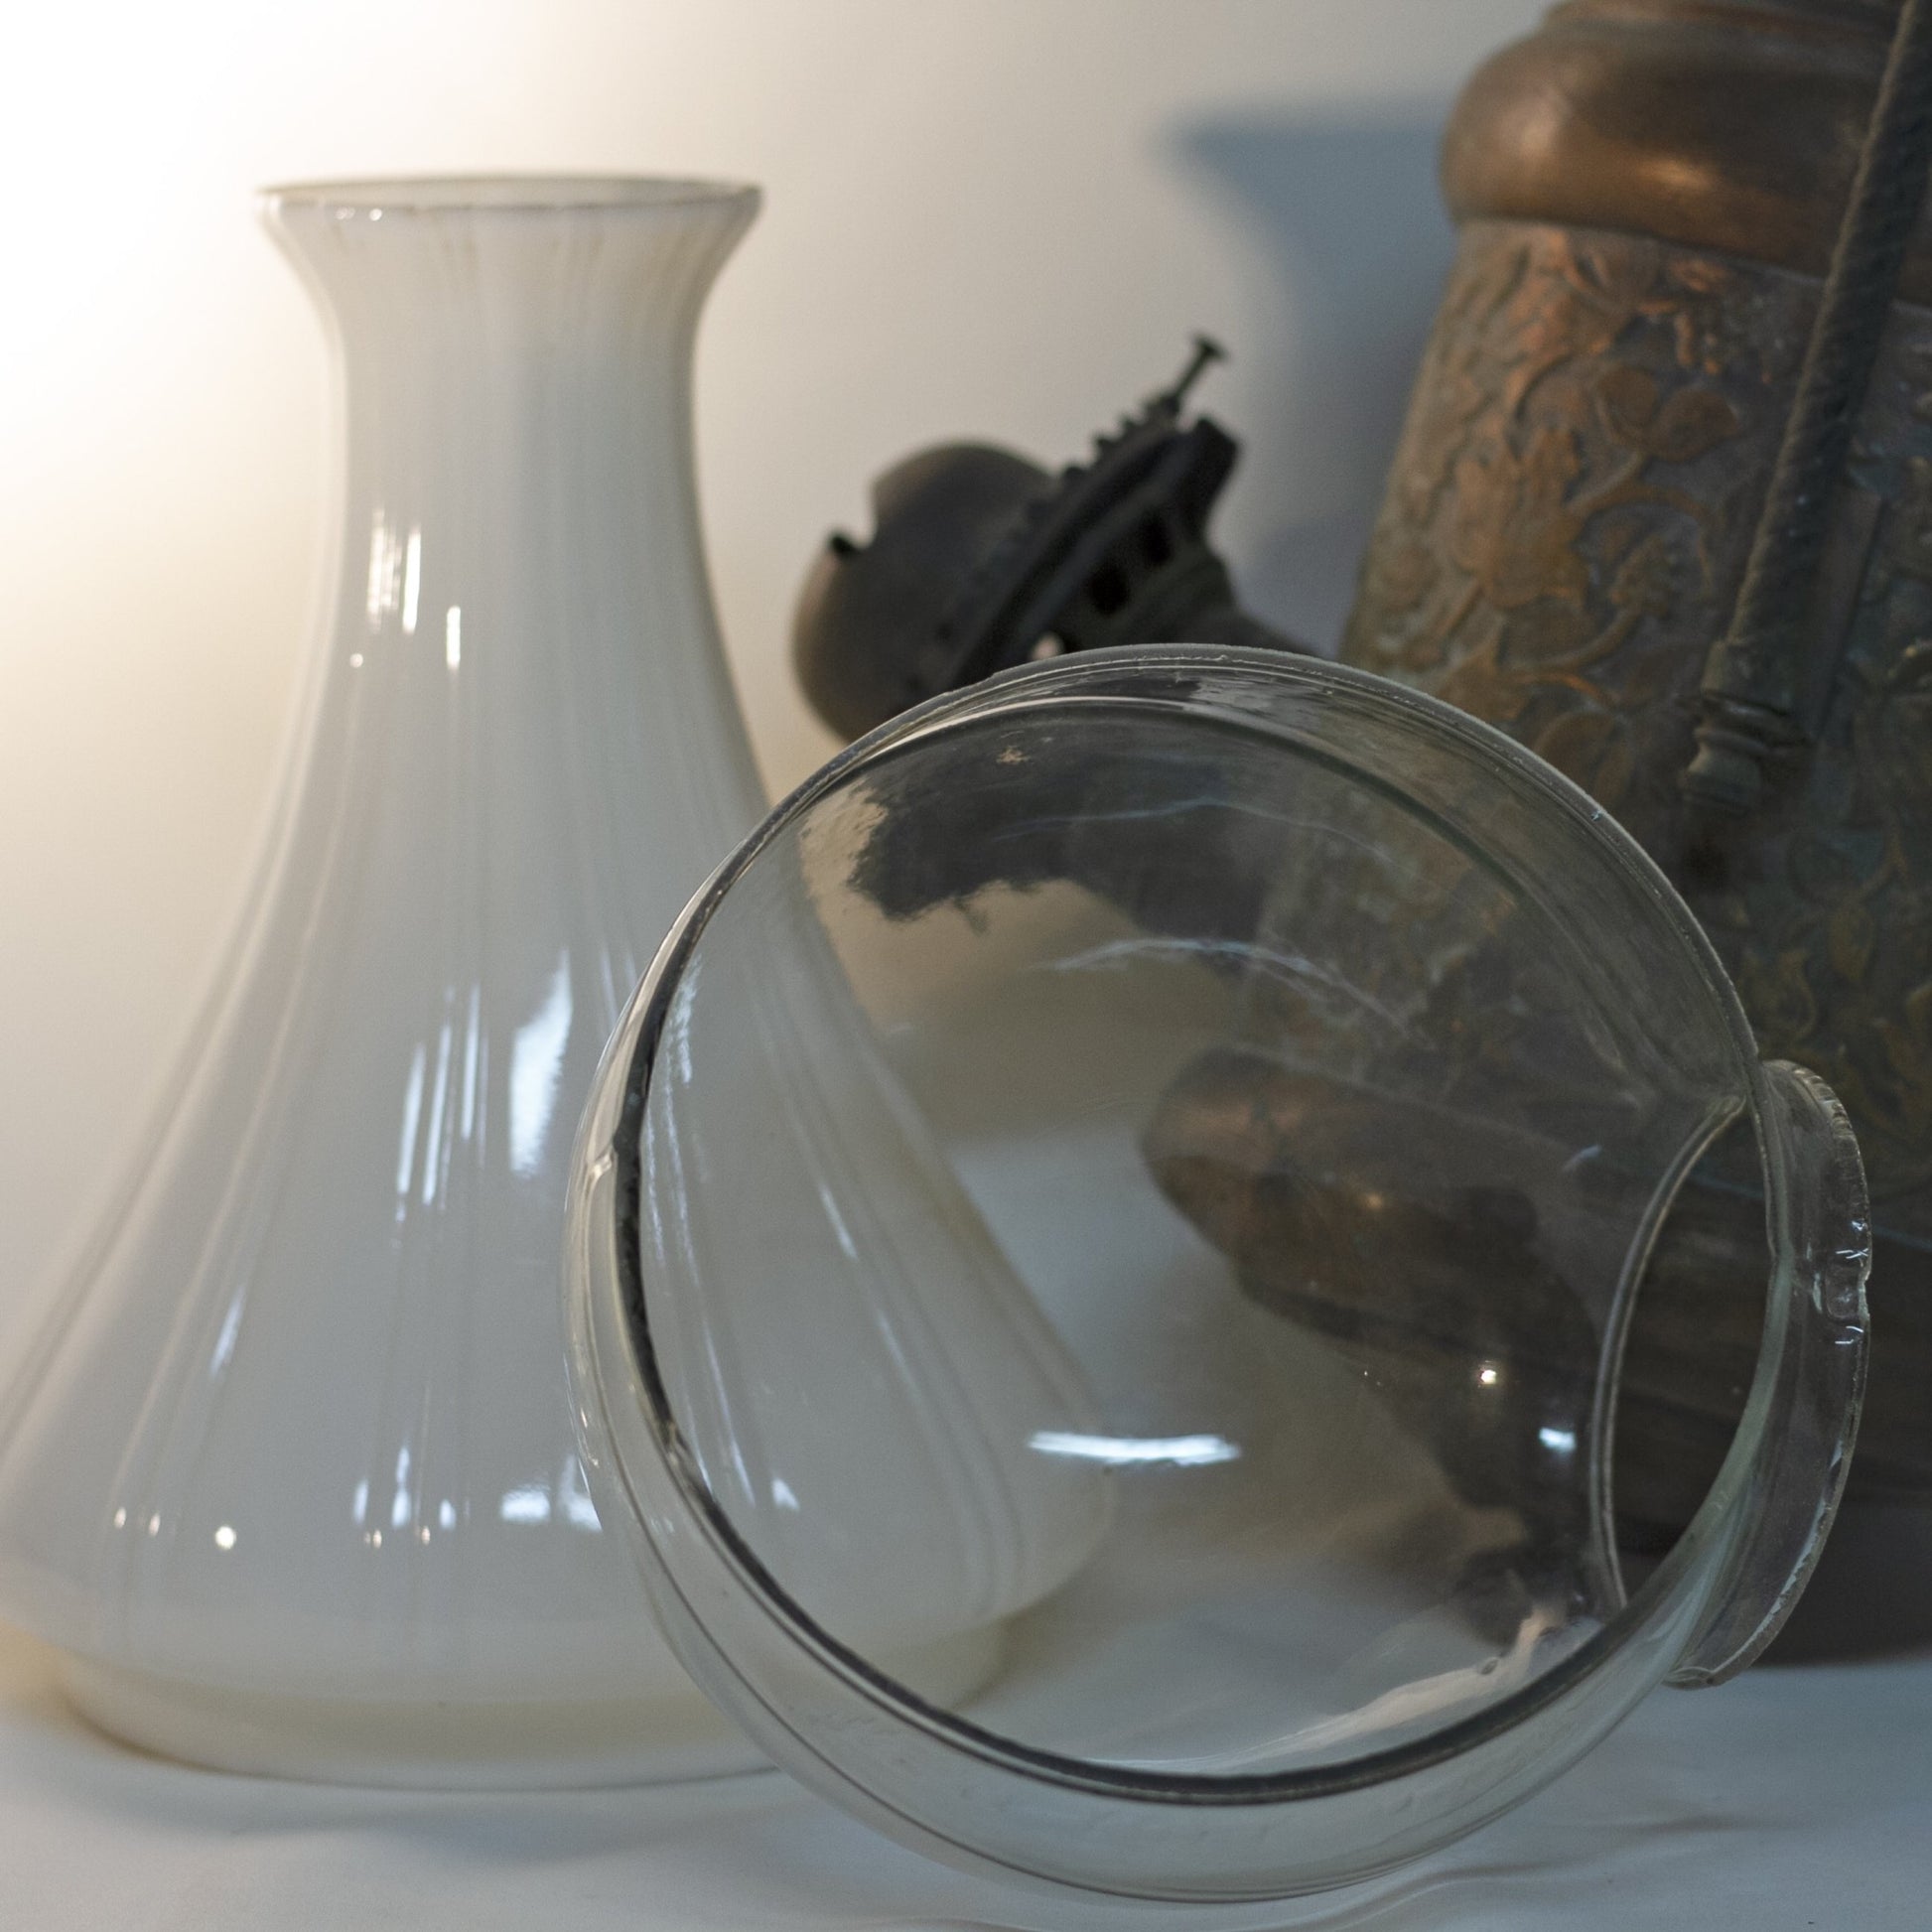 The Angle Lamp Company DOUBLE BURNER HANGING LAMP Circa Late 1800s